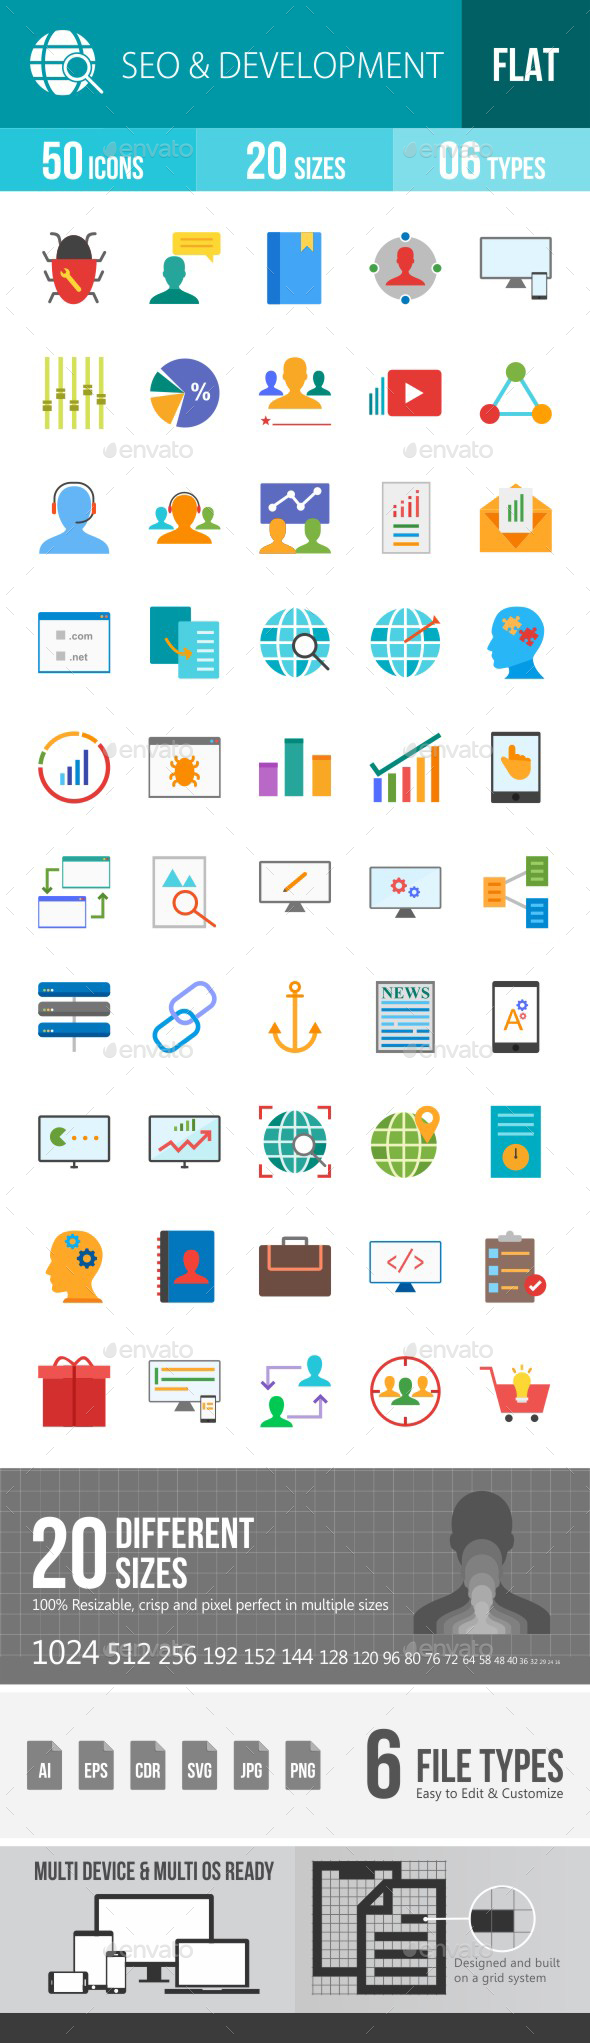 SEO & Development Services Flat Multicolor Icons